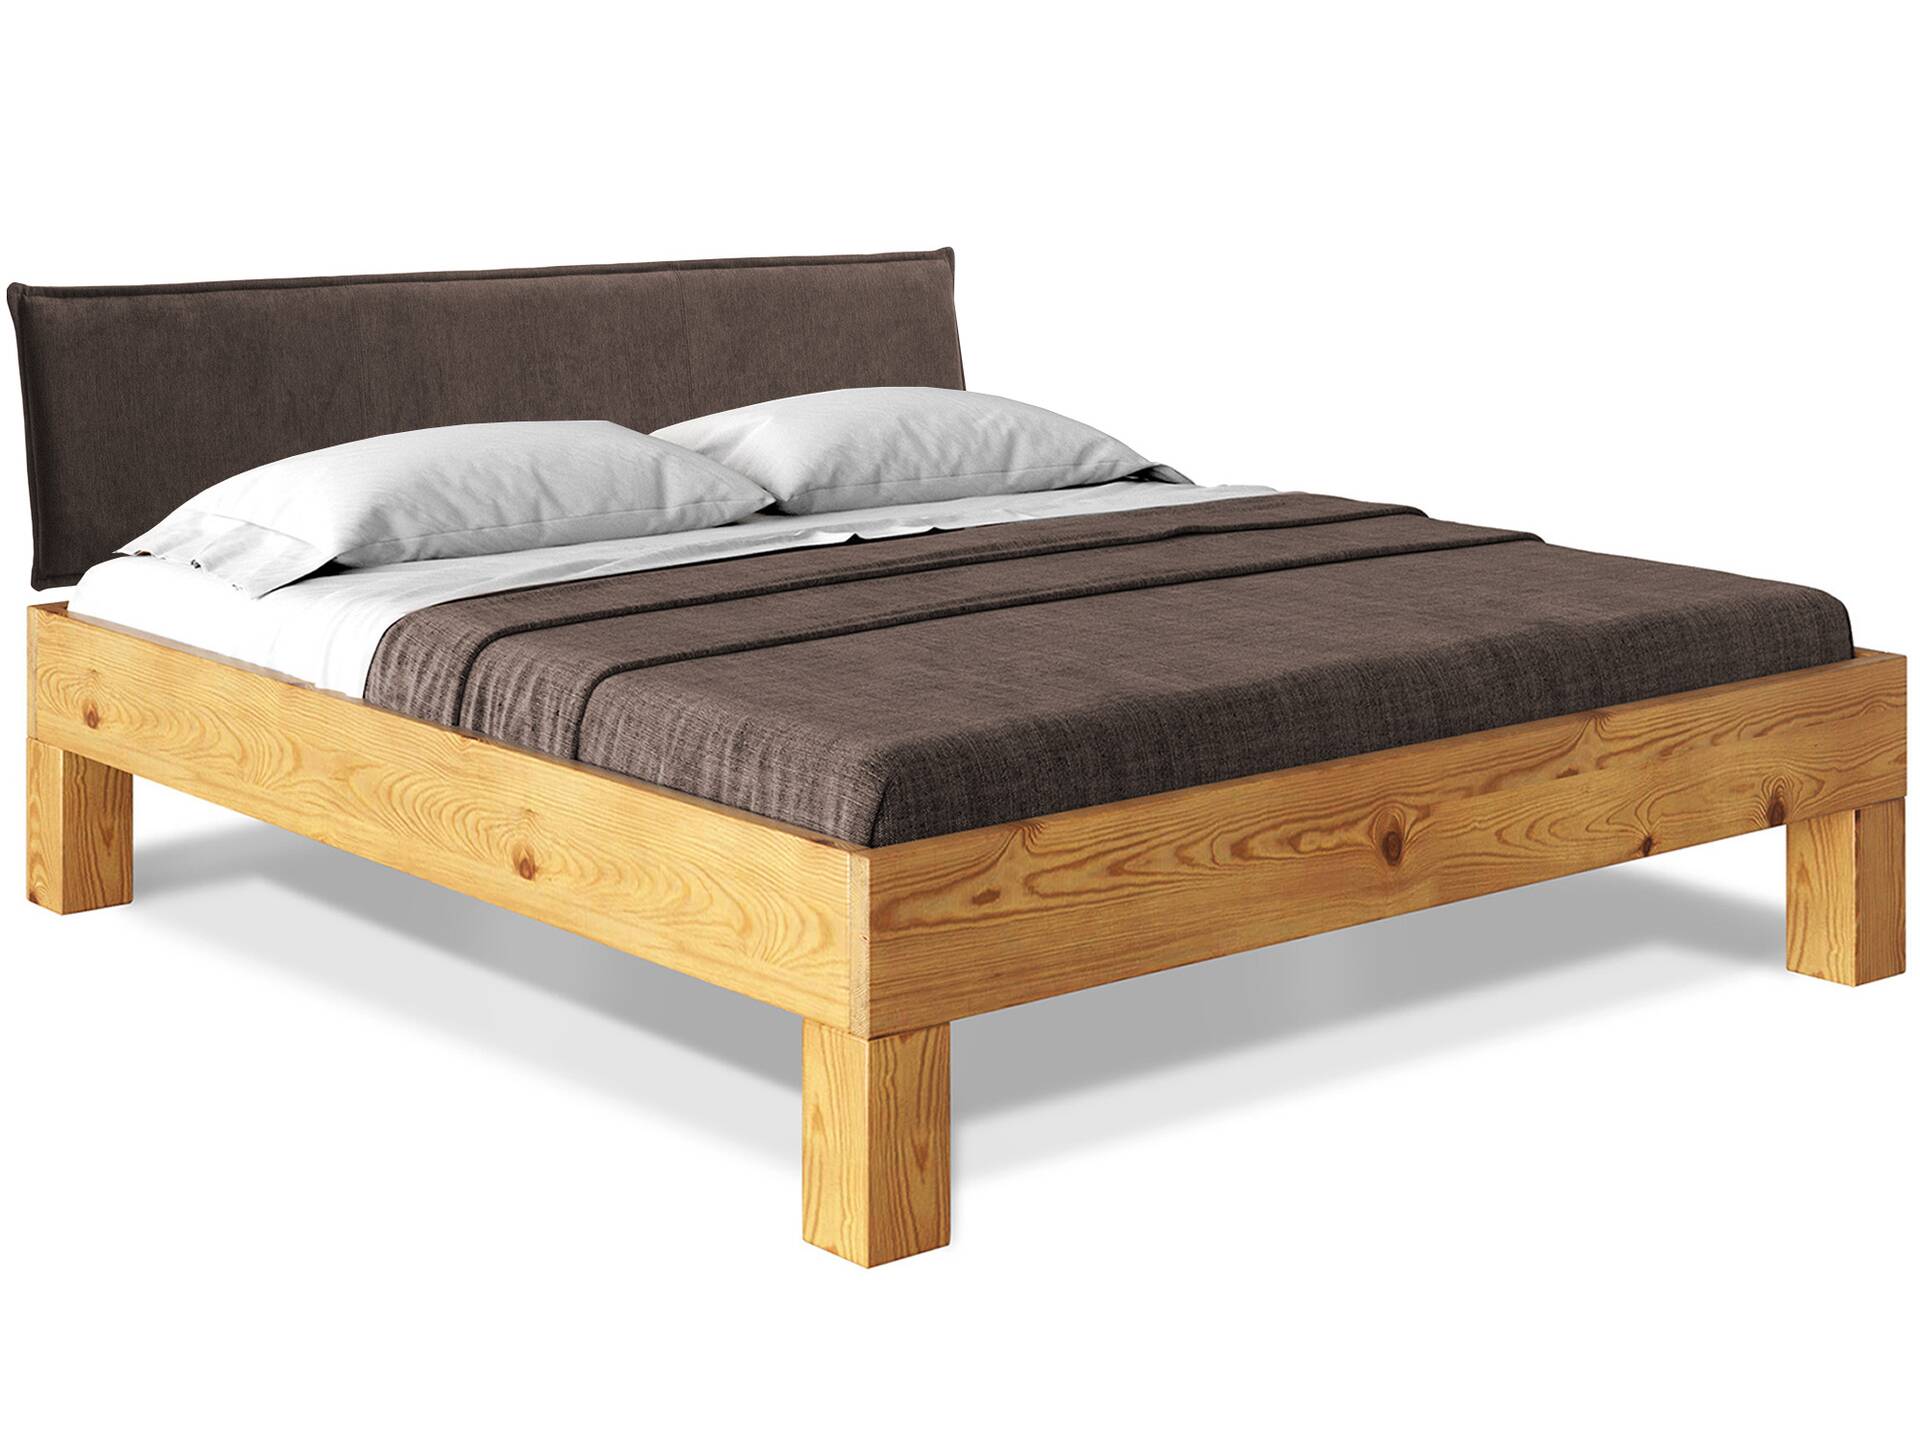 CURBY 4-Fuß-Bett mit Polster-Kopfteil, Material Massivholz, rustikale Altholzoptik, Fichte 160 x 200 cm | natur | Stoff Braun ohne Steppung | Standardhöhe